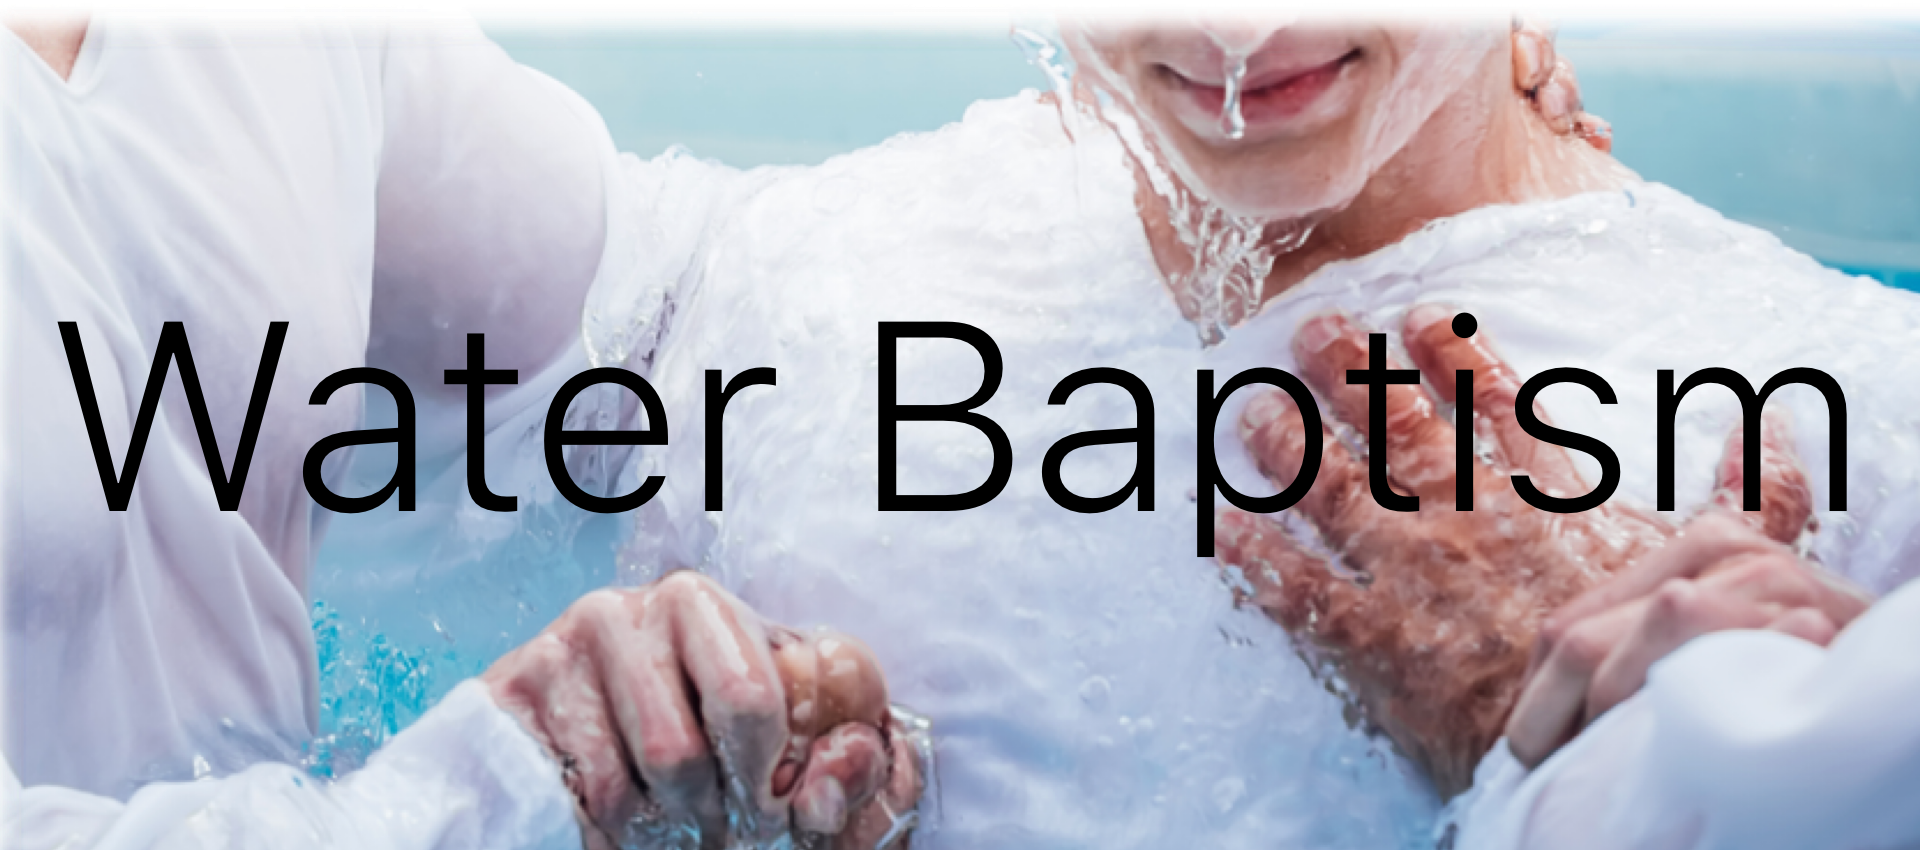 Water Baptism

 

 
